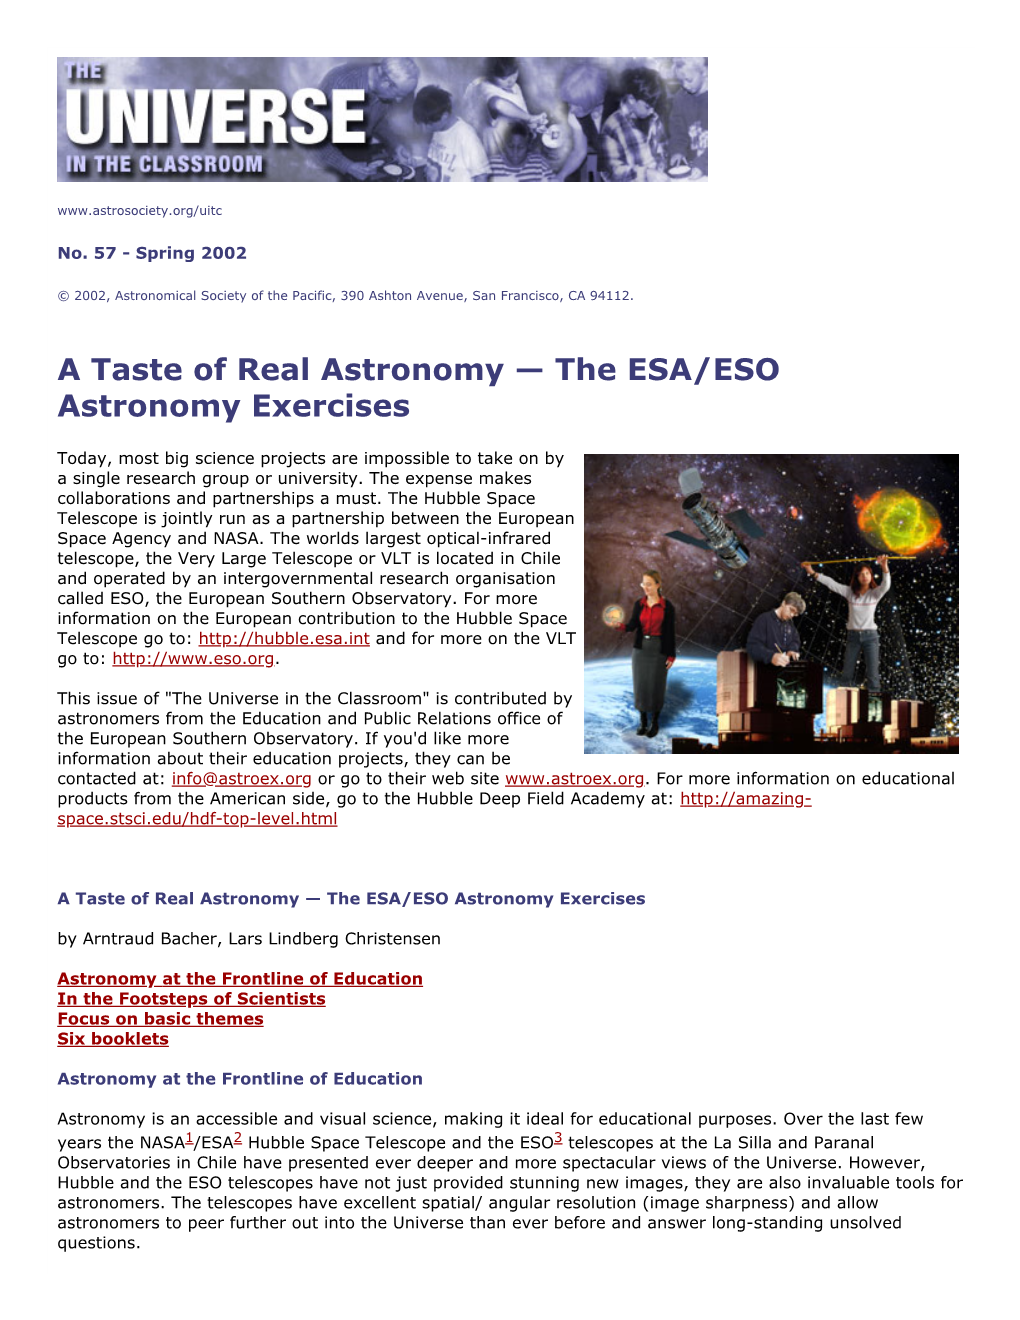 The ESA/ESO Astronomy Exercises